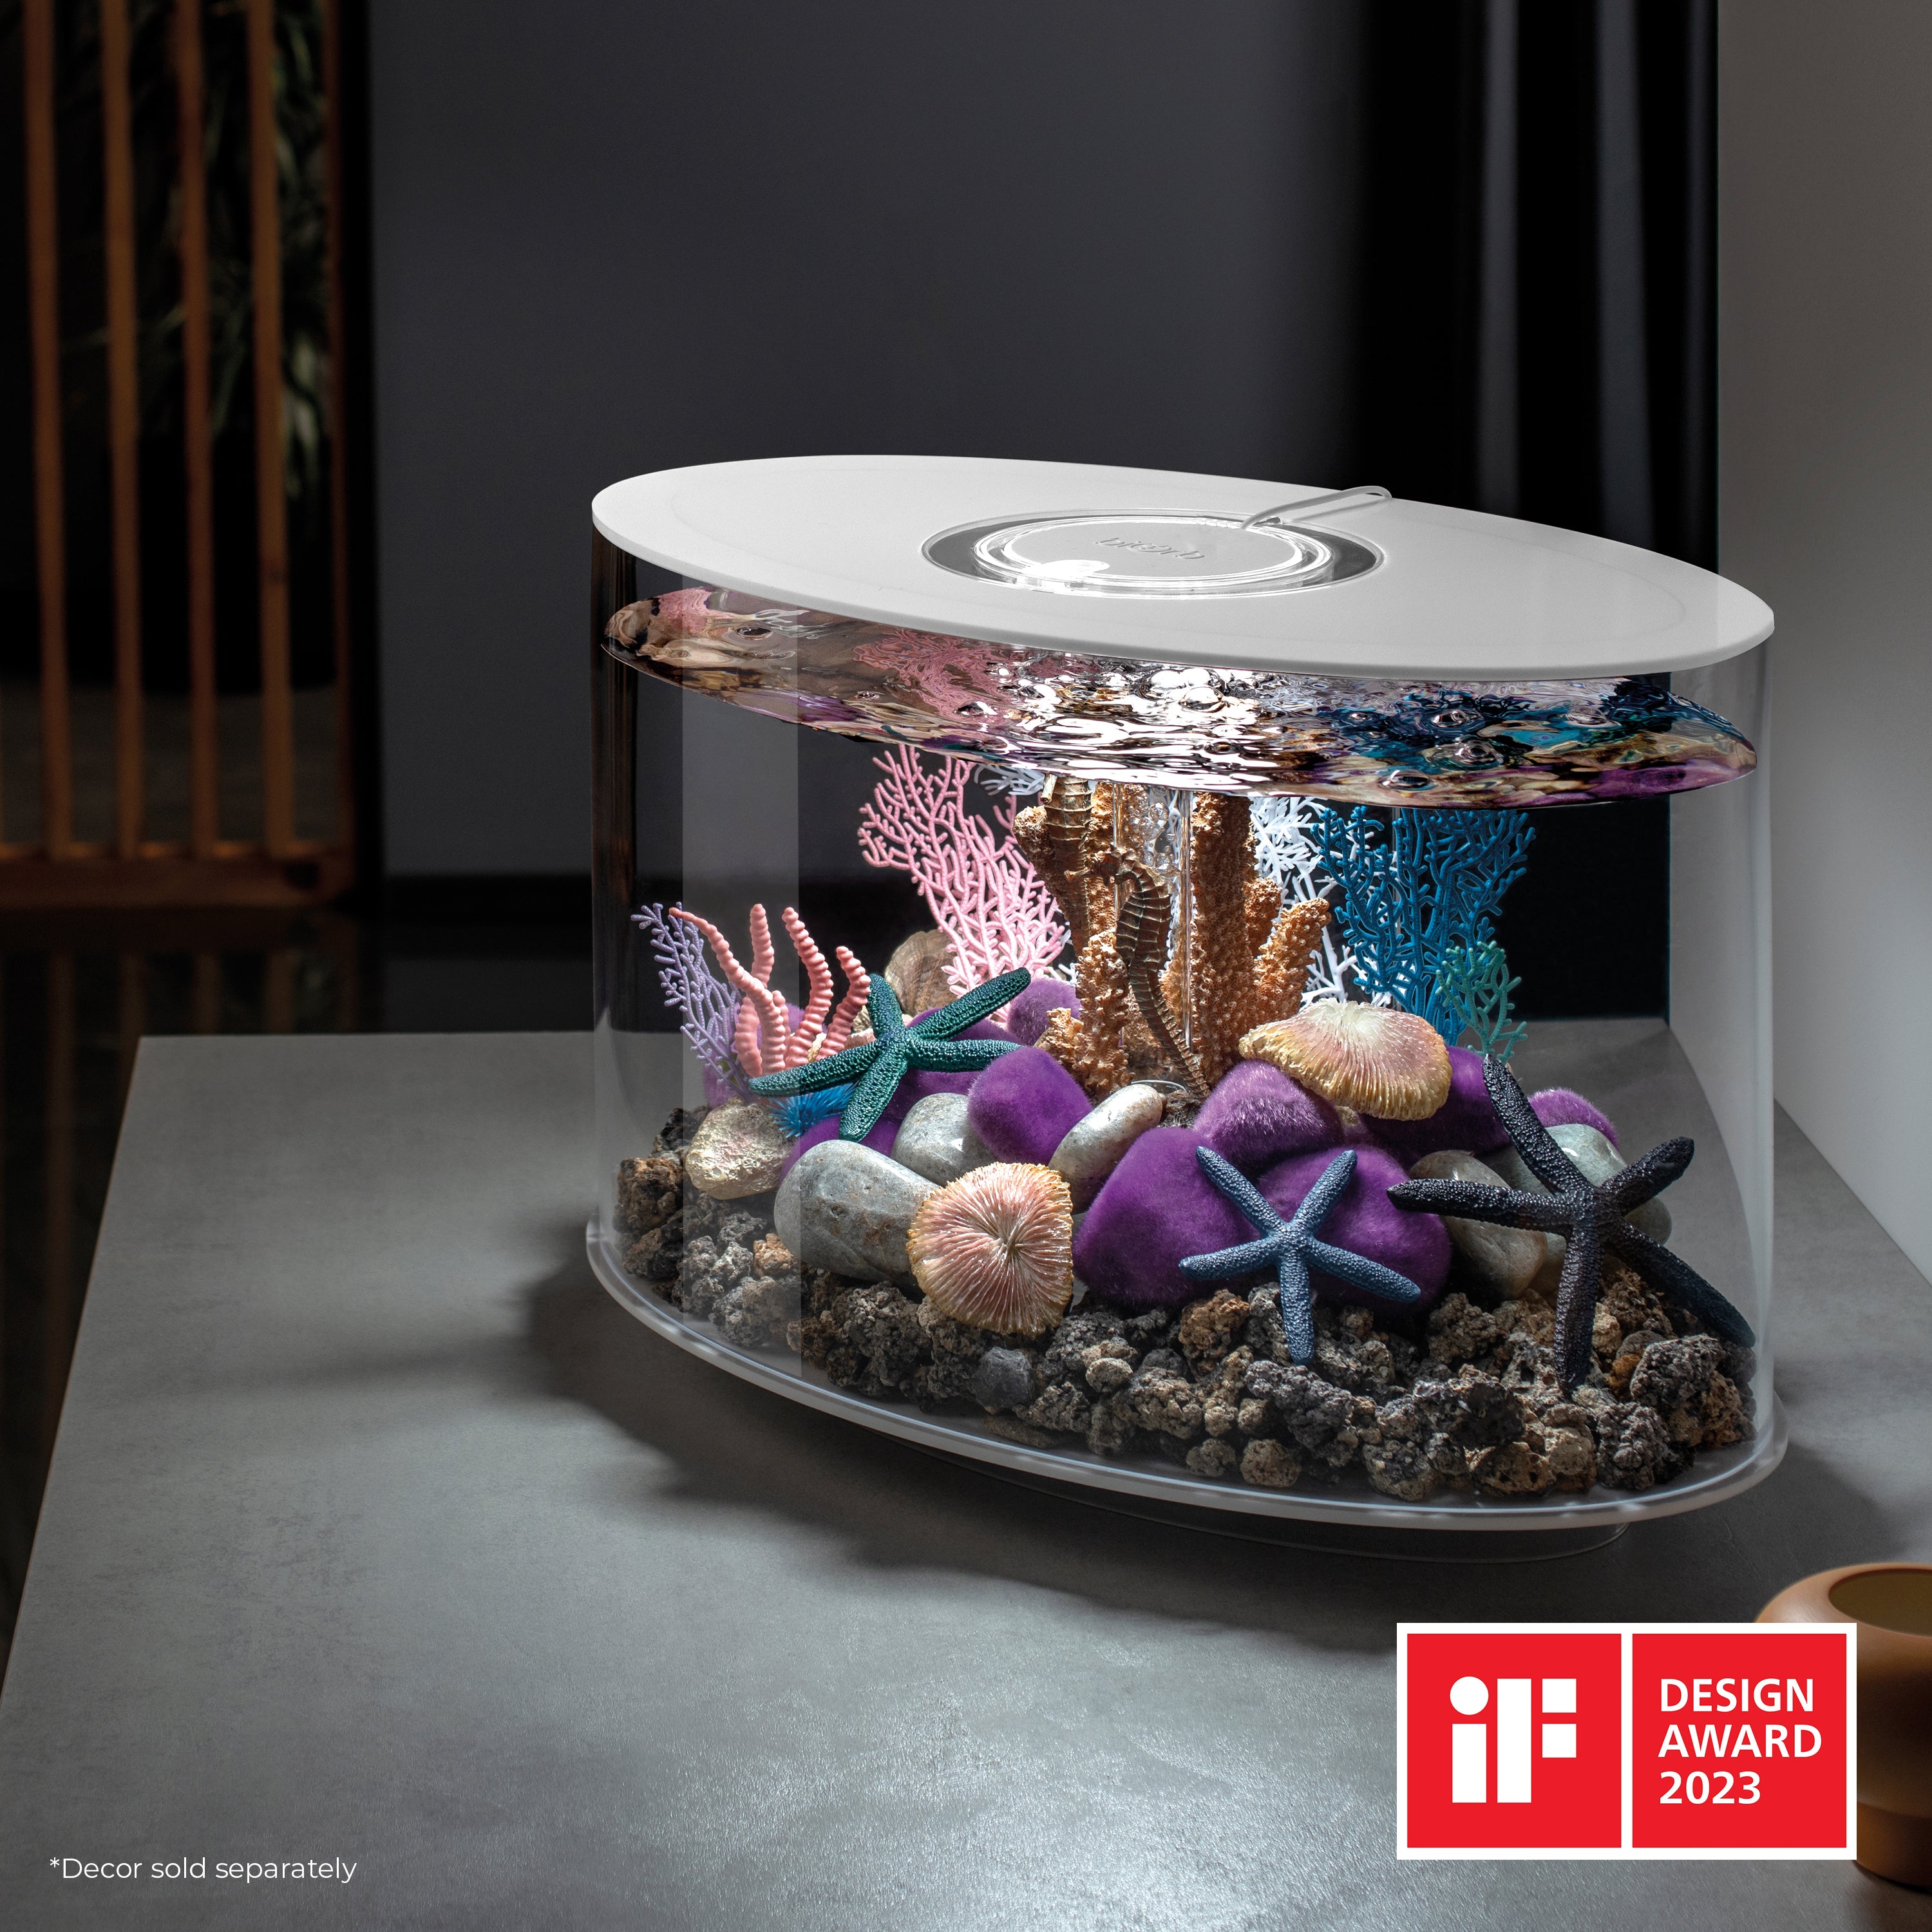 Get inspiration for your aquarium LOOP 15 Aquarium with Standard Light - 4 gallon available in white